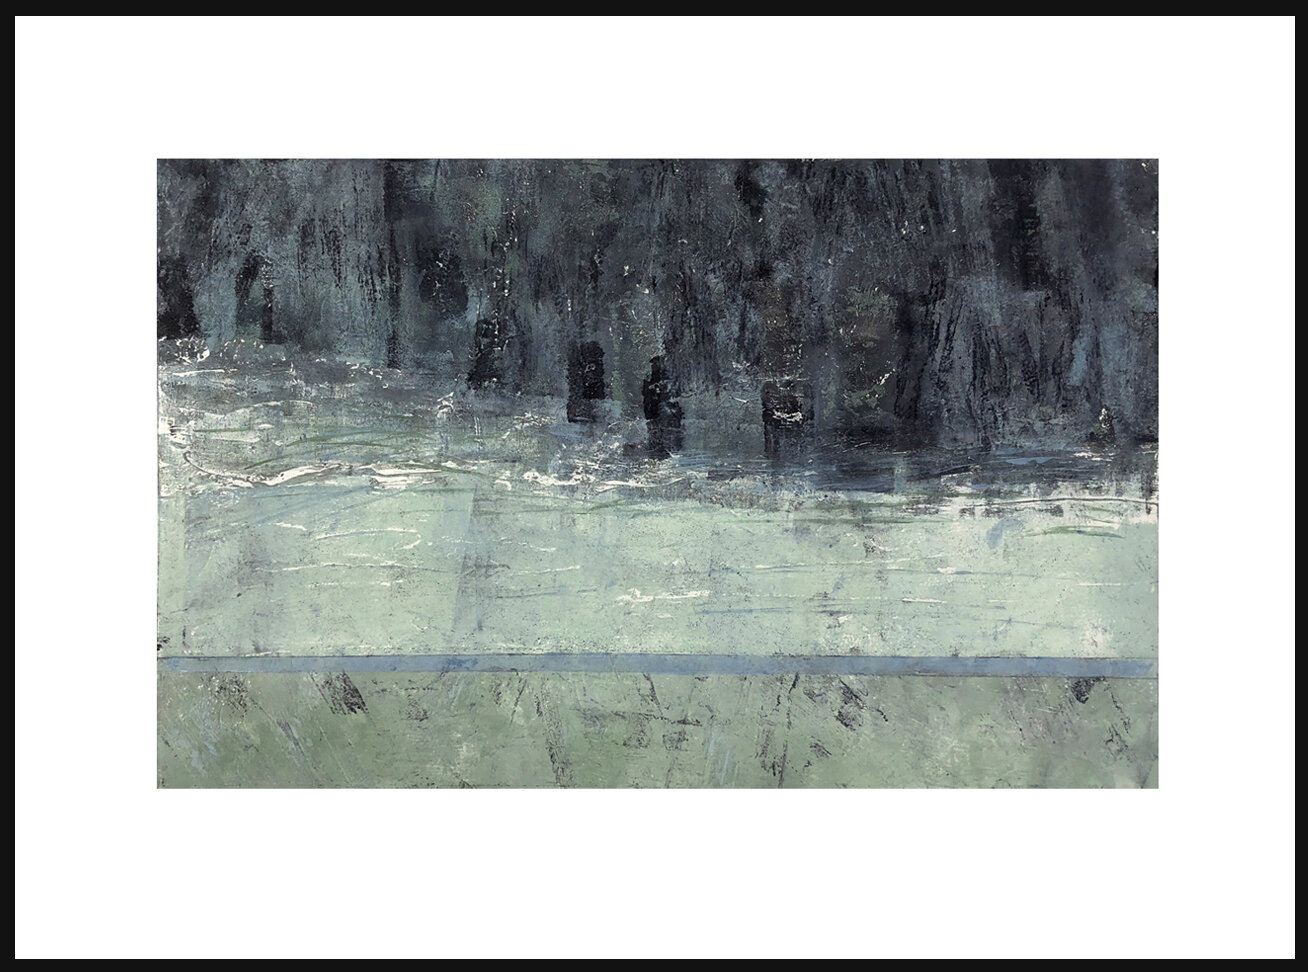    Estuary,   where fresh water meets salt water. Framed, 19+ x 27” Monoprint/Collagraph, 1/1   $450  